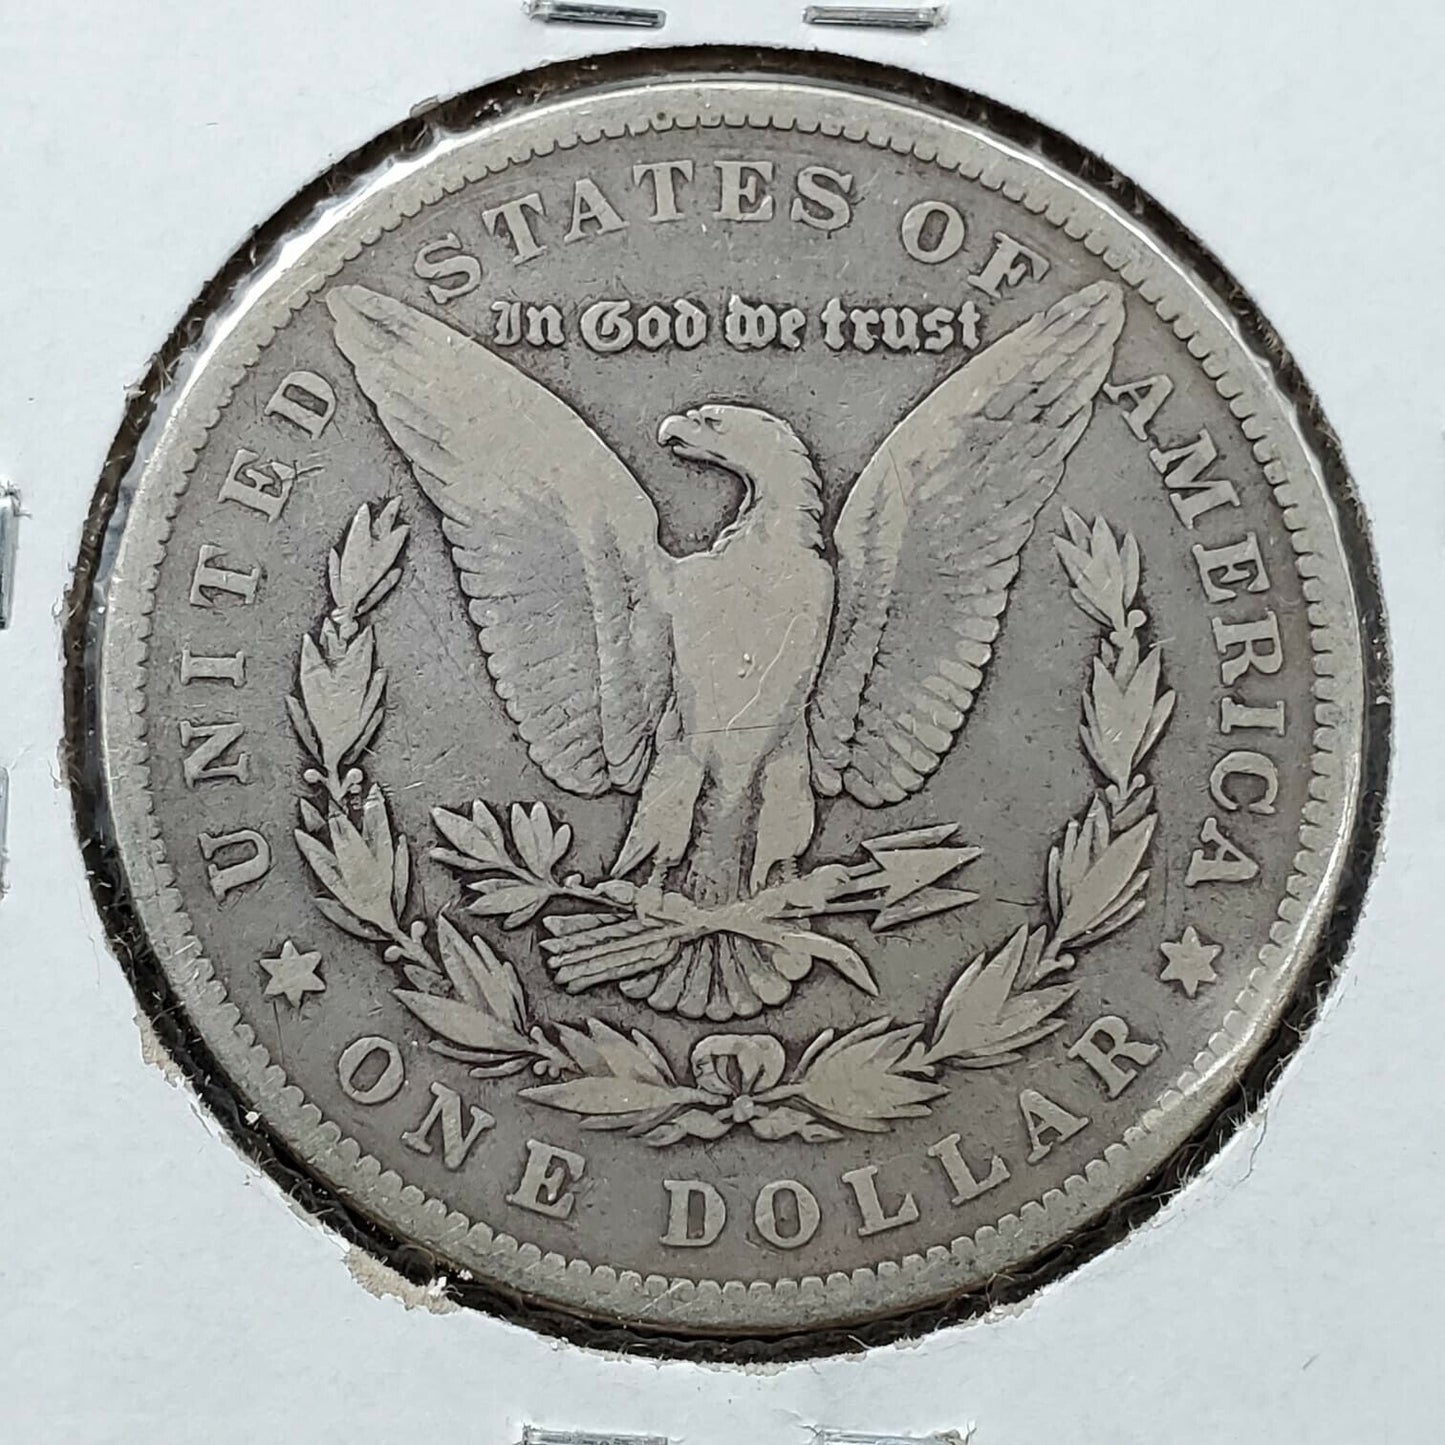 1878 P 7 TF REV 79 Morgan Silver Dollar Coin Philadelphia Choice VF Very Fine